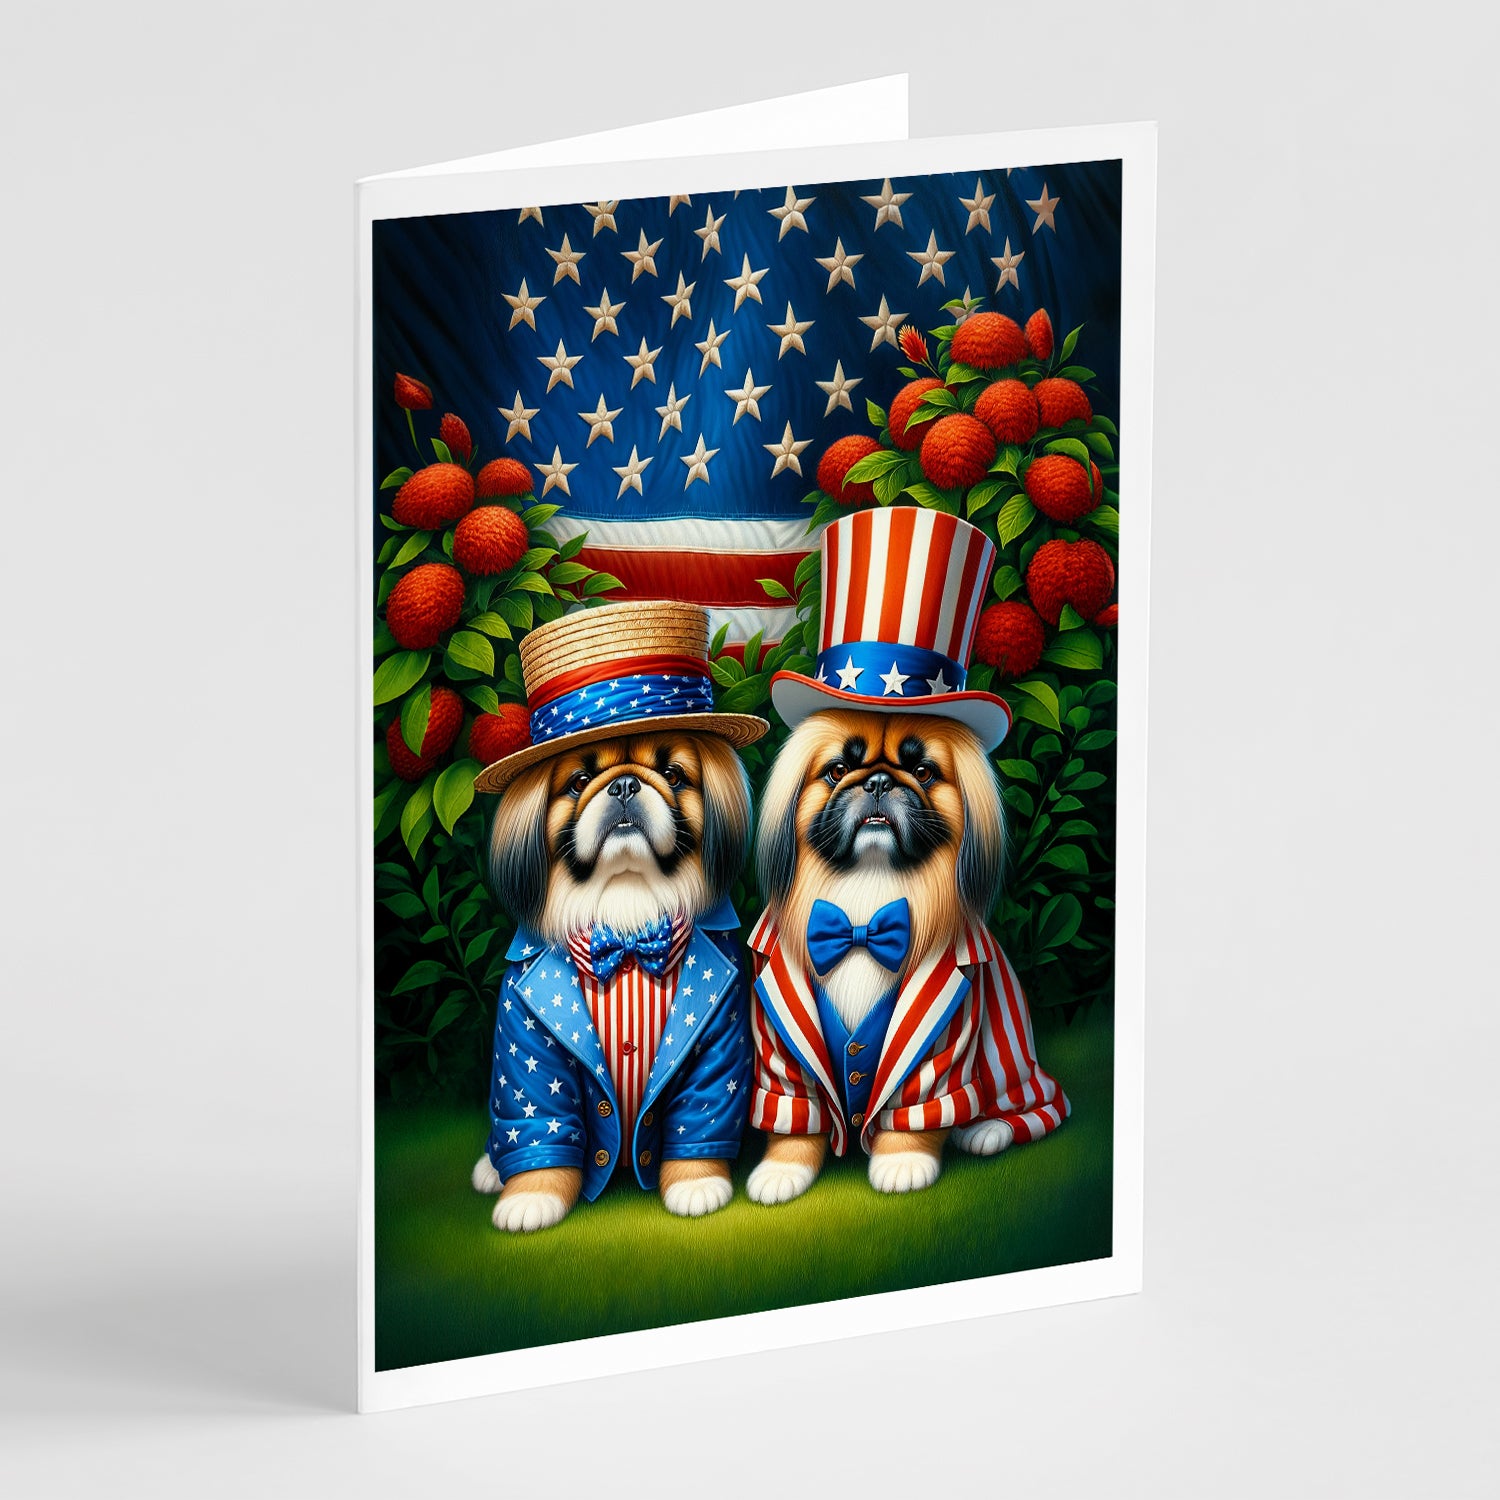 Buy this All American Pekingese Greeting Cards Pack of 8